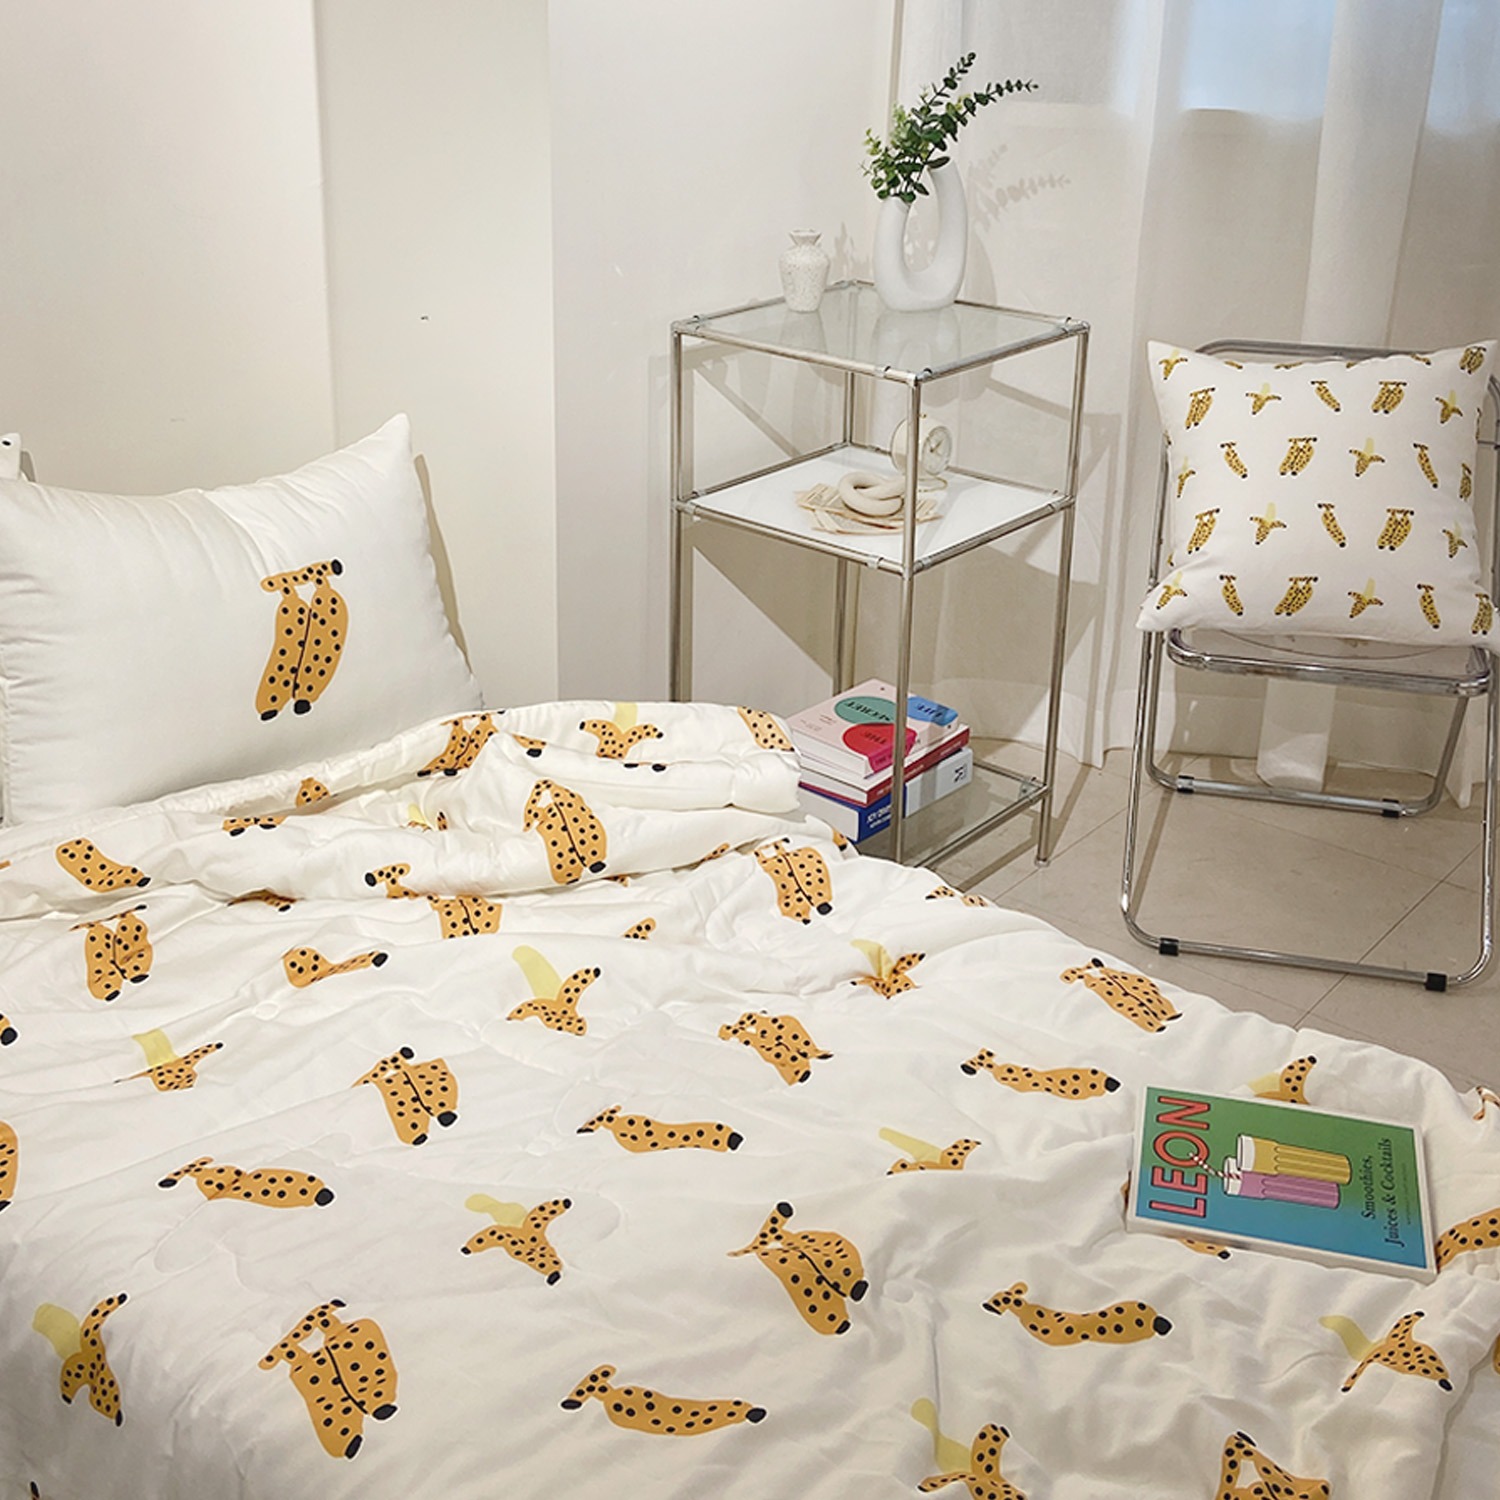 [a.o.b] Banana comforter bedding